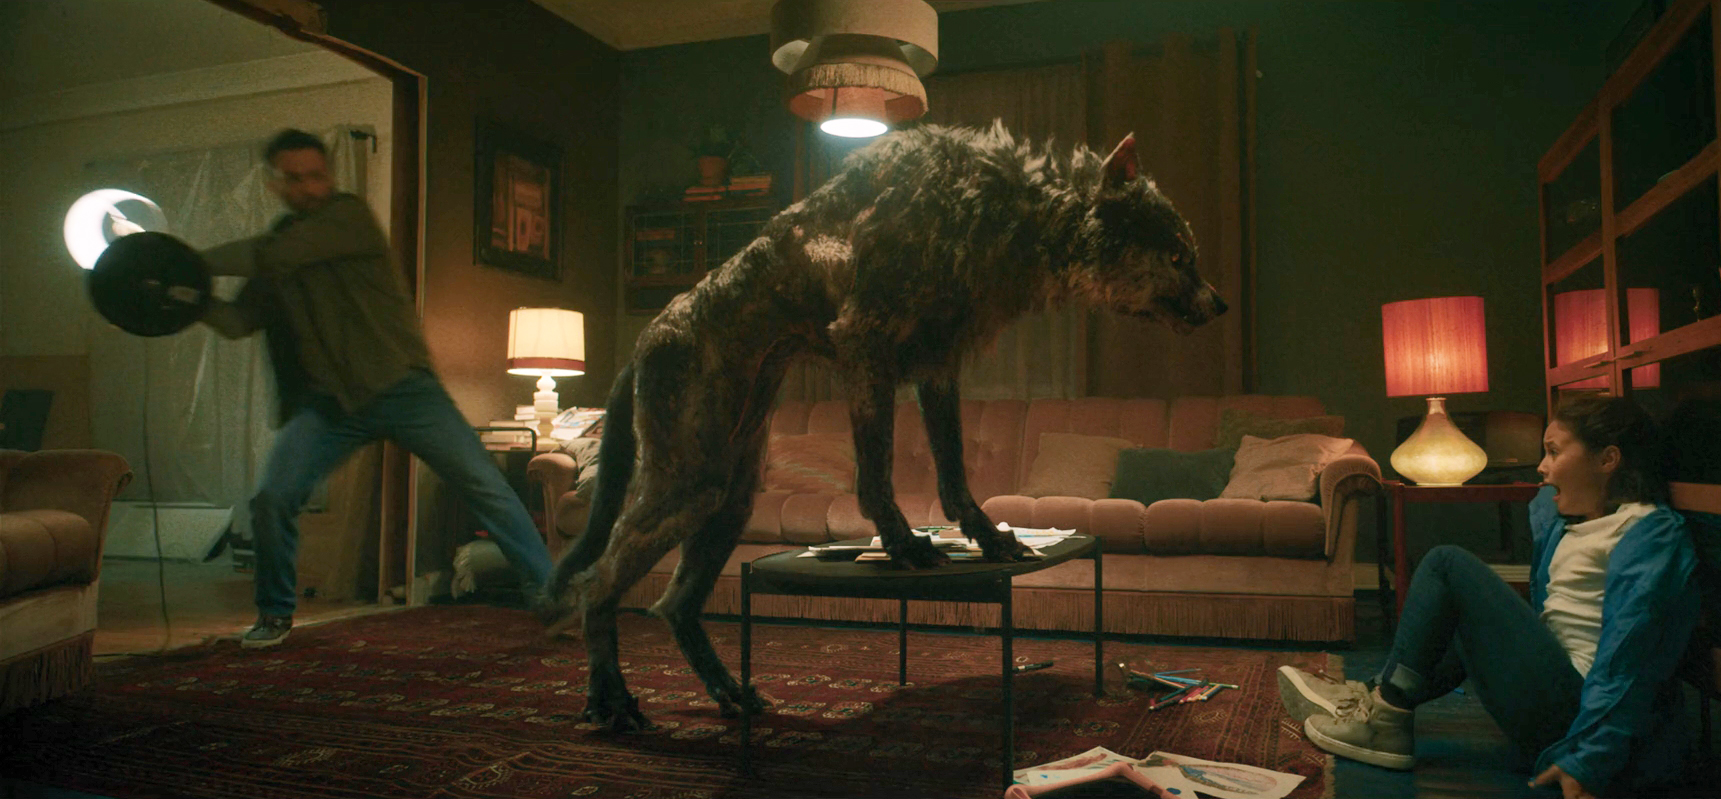 Viking Wolf Review - Netflixs Norwegian Werewolf Movie Has a Weak Bite